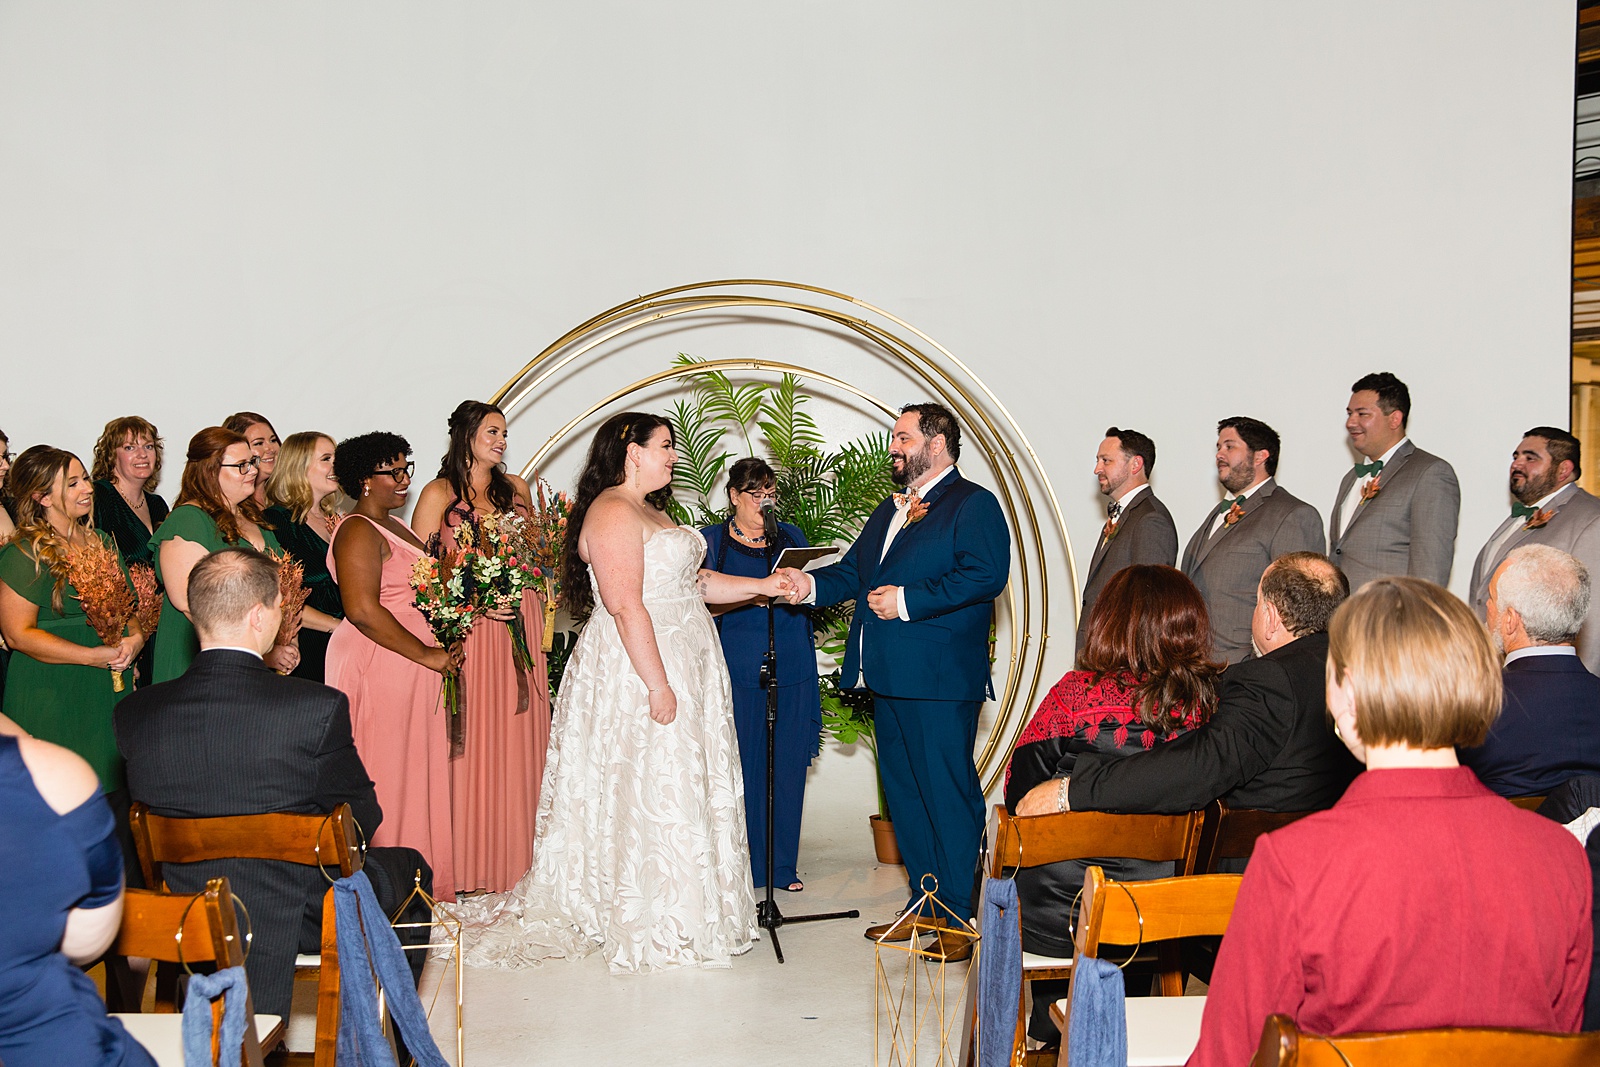 Wedding ceremony at MonOrchid by Phoenix wedding photographer PMA Photography.